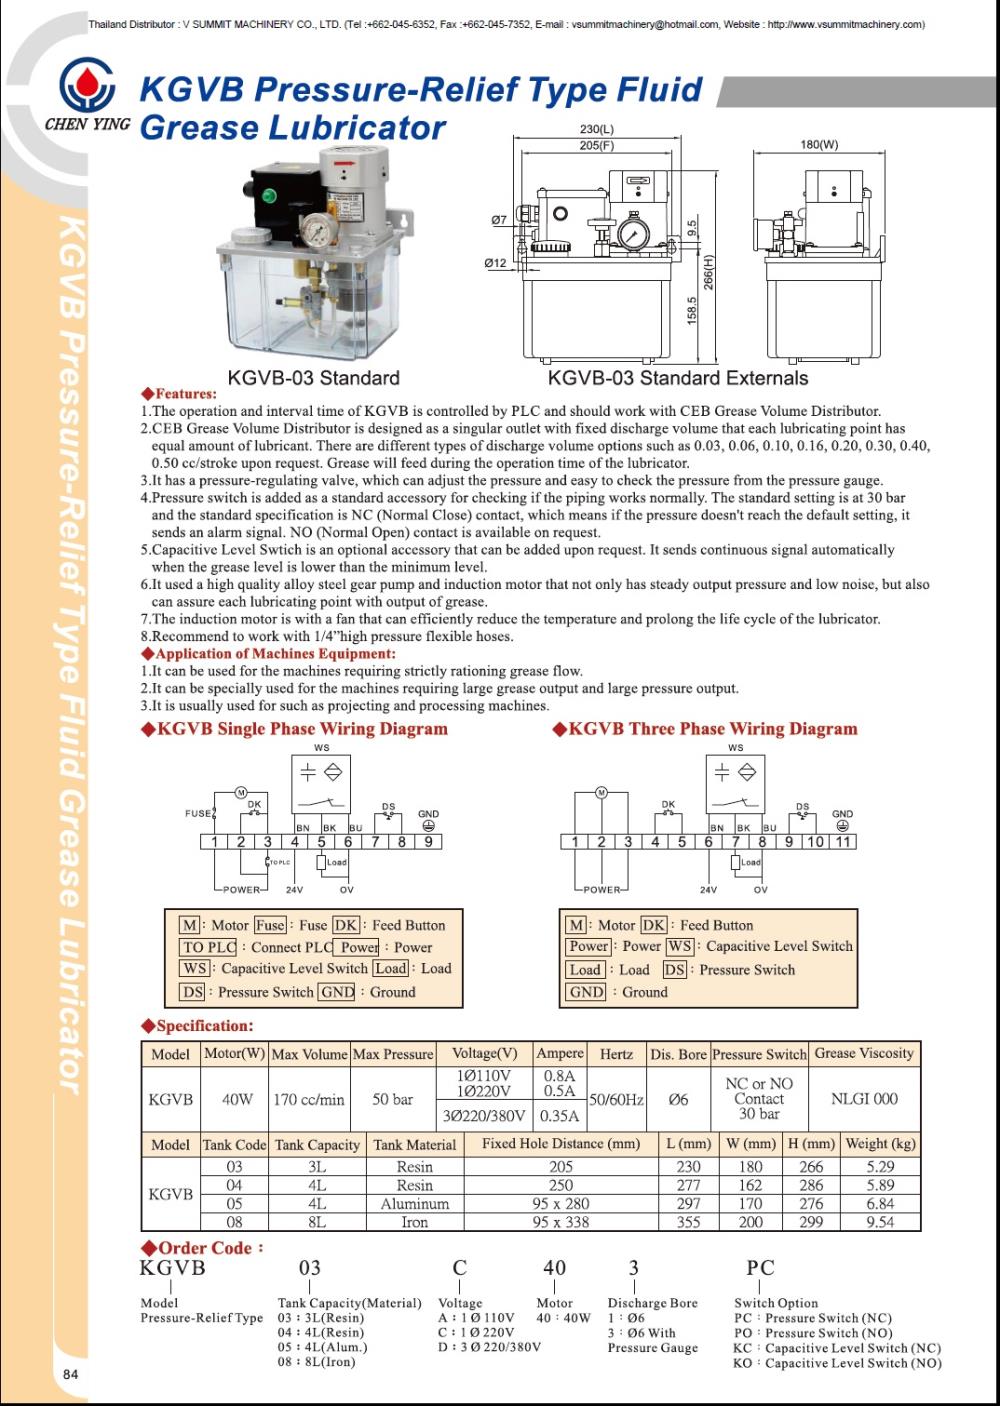 KGVB Pressure-Relief Type Fluid Grease Lubricator, ปั๊มจารบีออโต้ประเภทแรงดันระบบ PLC, เครื่องจ่ายจารบีออโต้ประเภทแรงดันระบบ PLC, กาจ่ายจารบีออโต้ประเภทแรงดันระบบ PLC, ปั๊มจารบีไฟฟ้าประเภทแรงดันระบบ PLC, เครื่องจ่ายจารบีไฟฟ้าประเภทแรงดันระบบ PLC, กาจารบีไฟฟ้าประเภทแรงดันระบบ PLC 